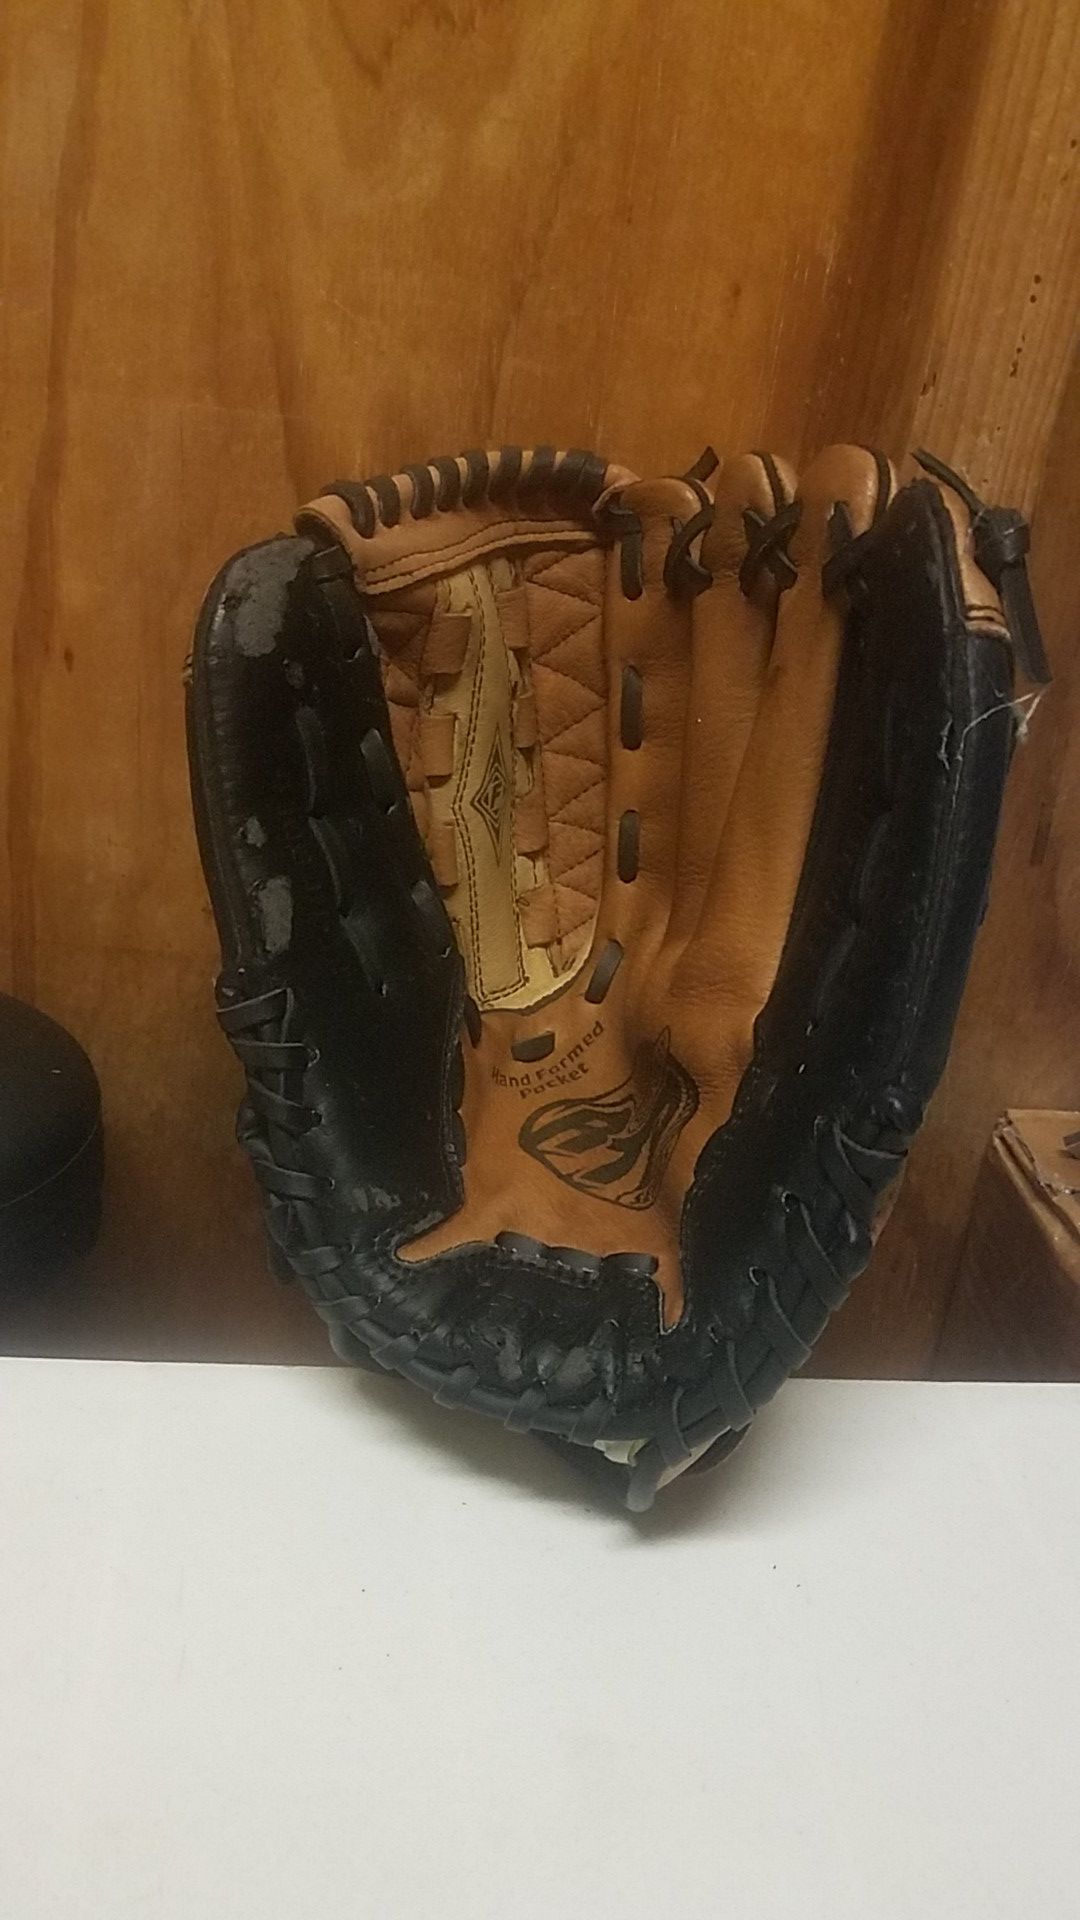 Franklin RTP softball glove, 12"